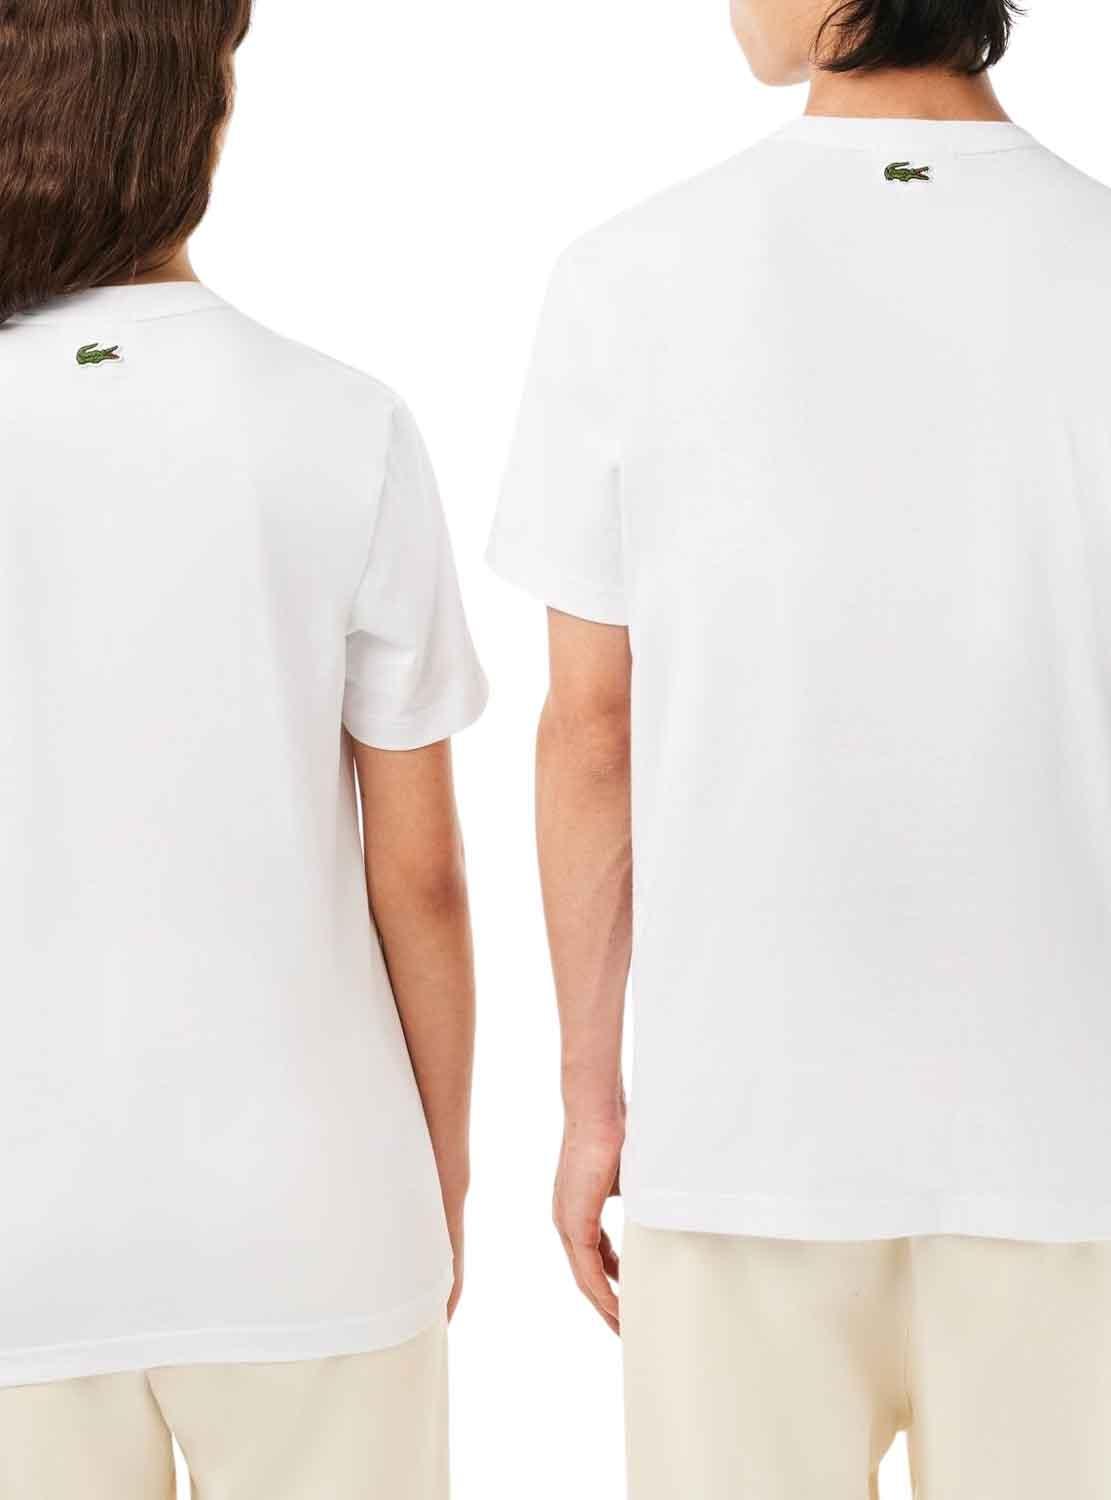 T-Shirt Lacoste Effetto 3D Bianco Uomo Donna